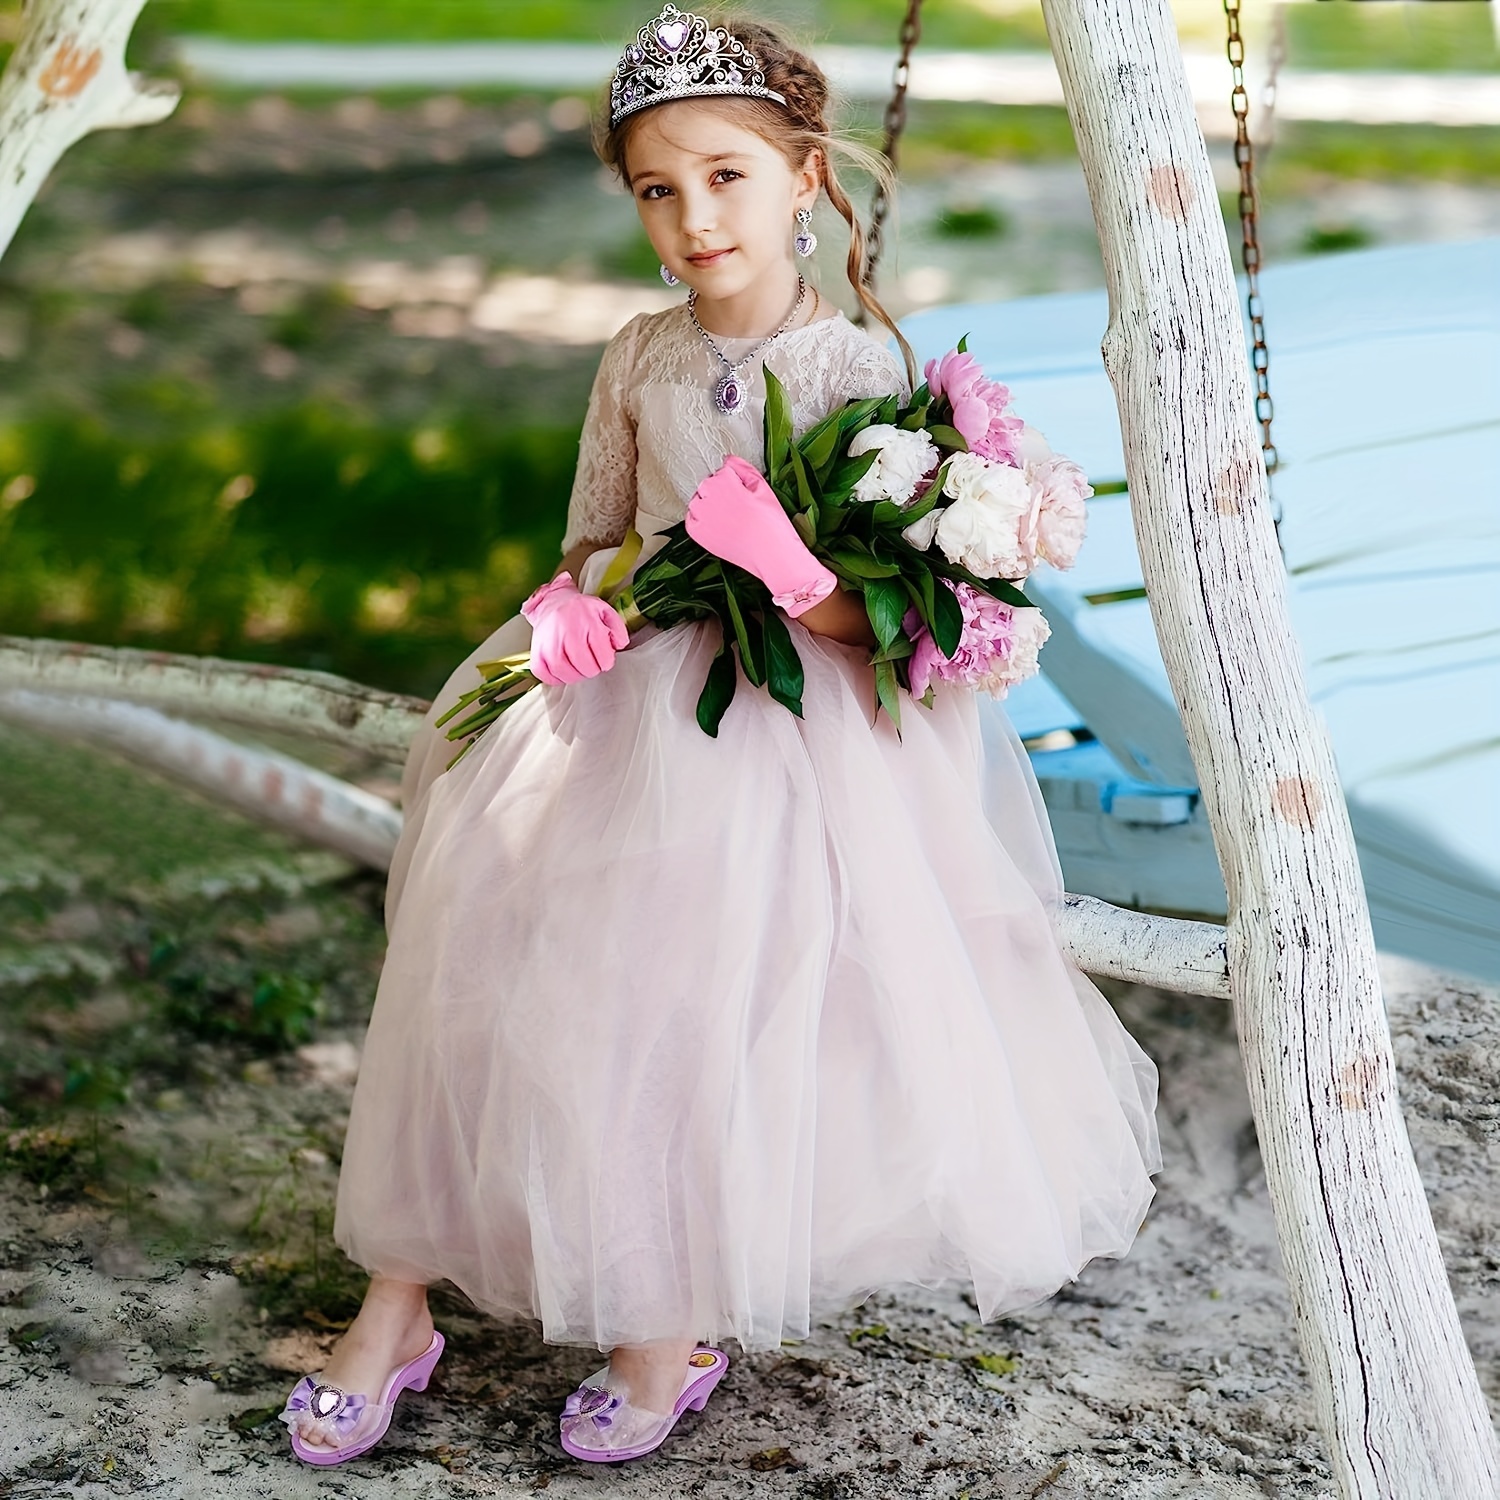  Zapatos de princesa y juguetes de joyería para niñas, ropa de  vestir de princesa para niñas pequeñas, zapatos de vestir para niñas  pequeñas, aretes de collar de corona, anillo, juguetes para